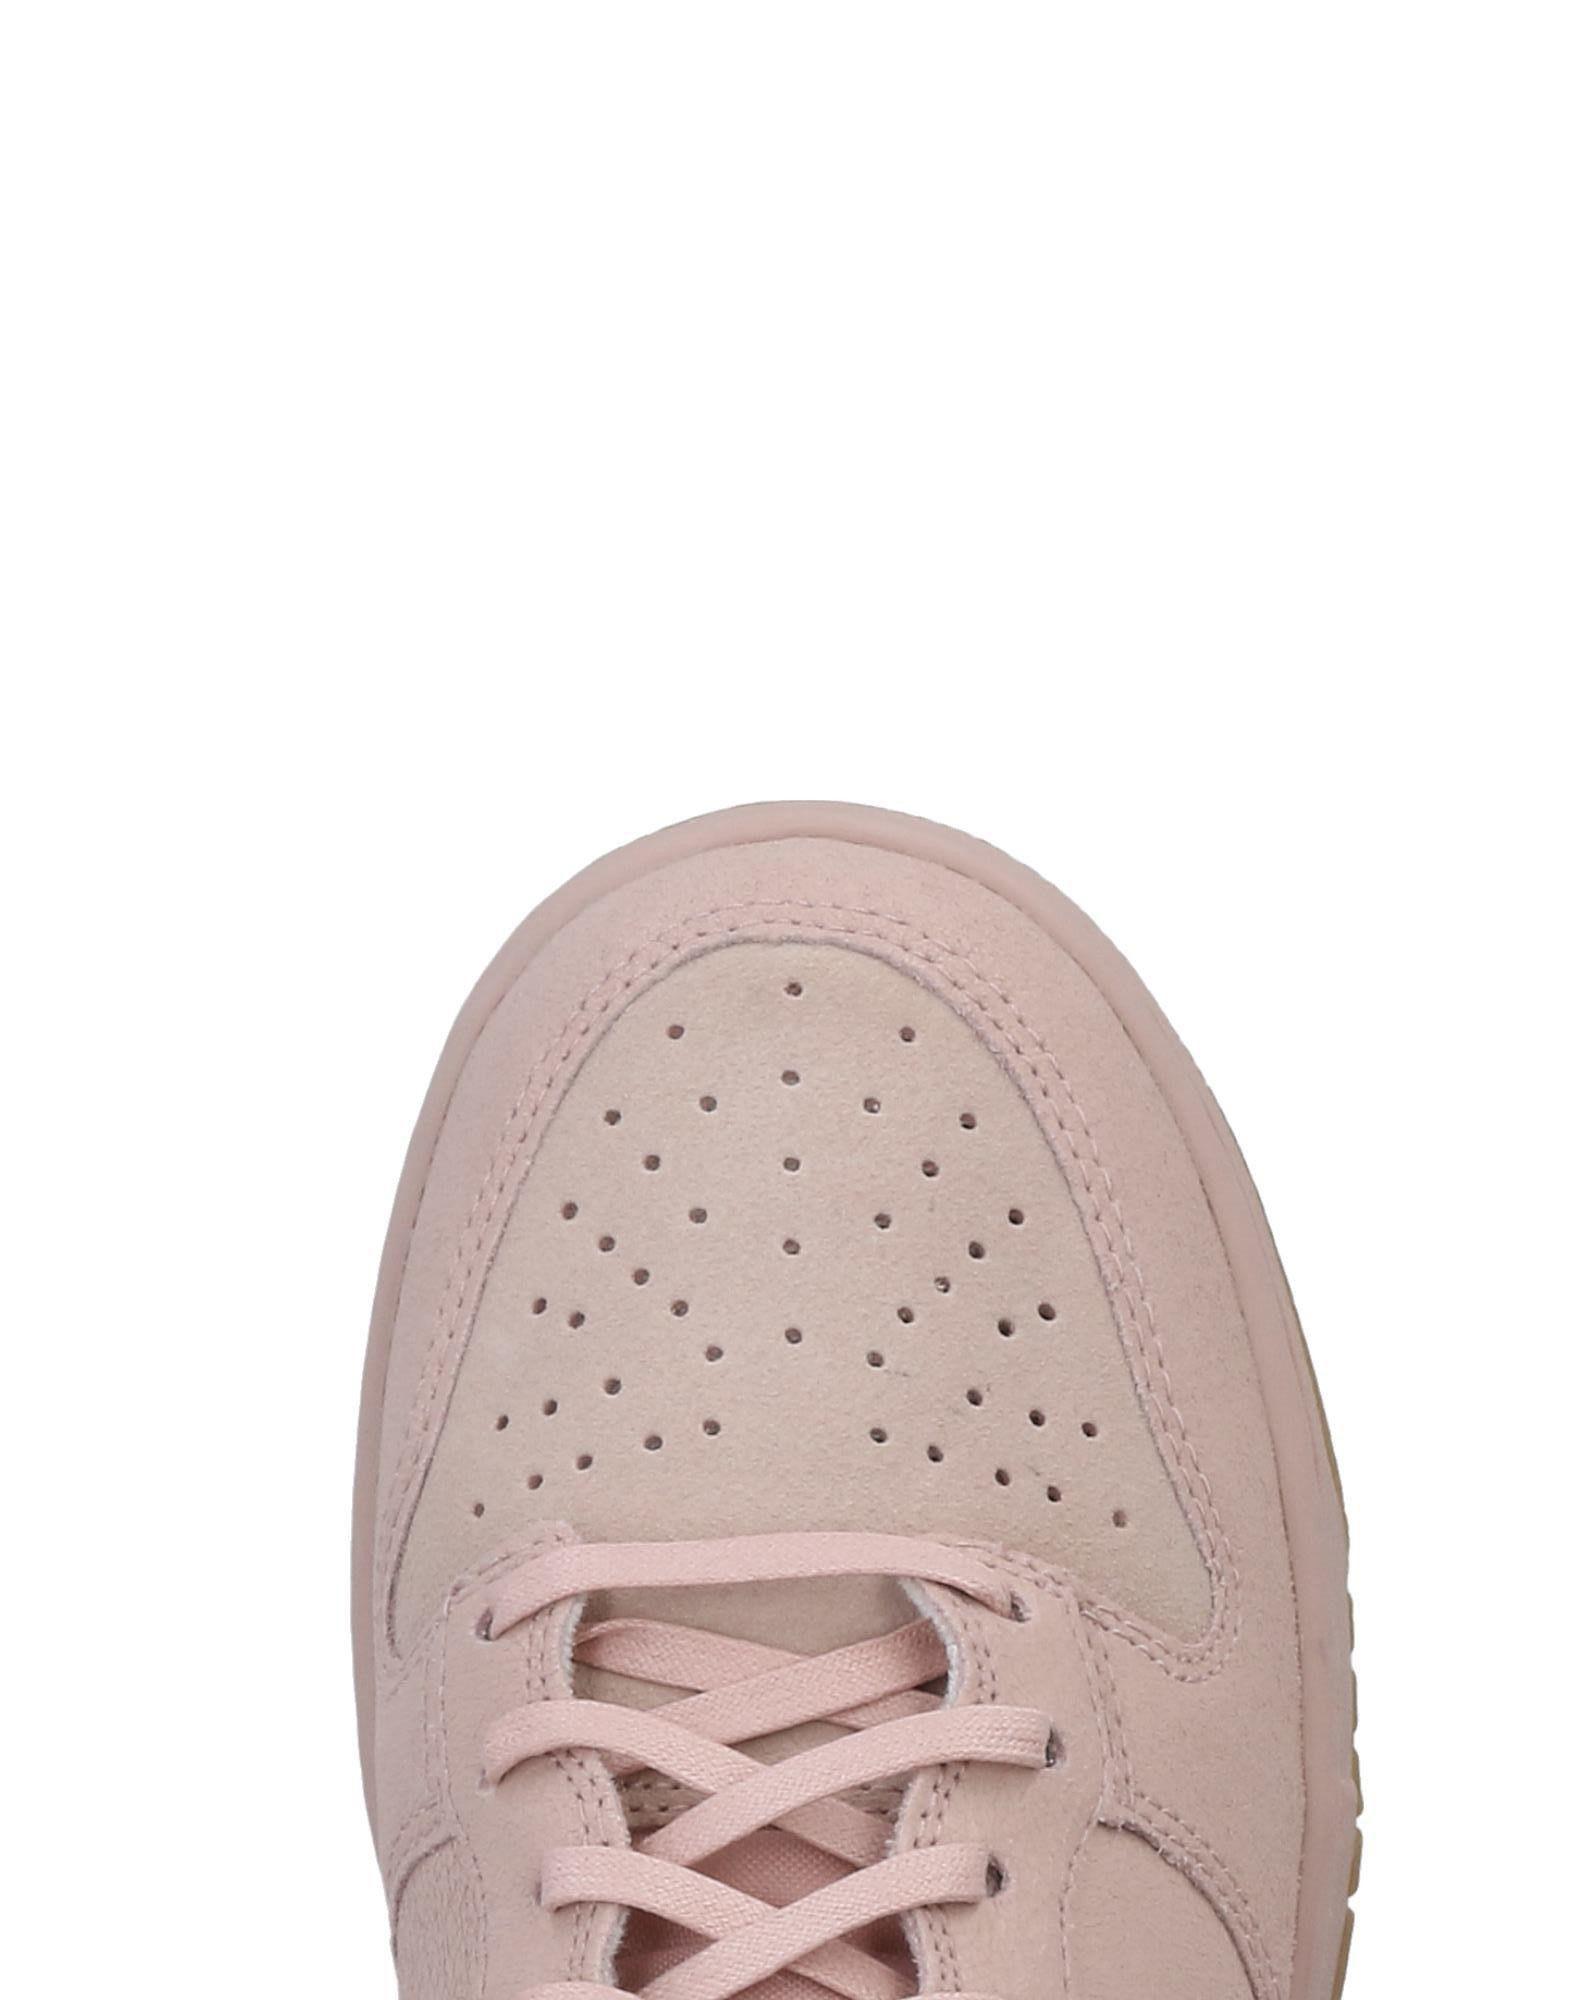 Nike High-tops & Sneakers in Pink | Lyst